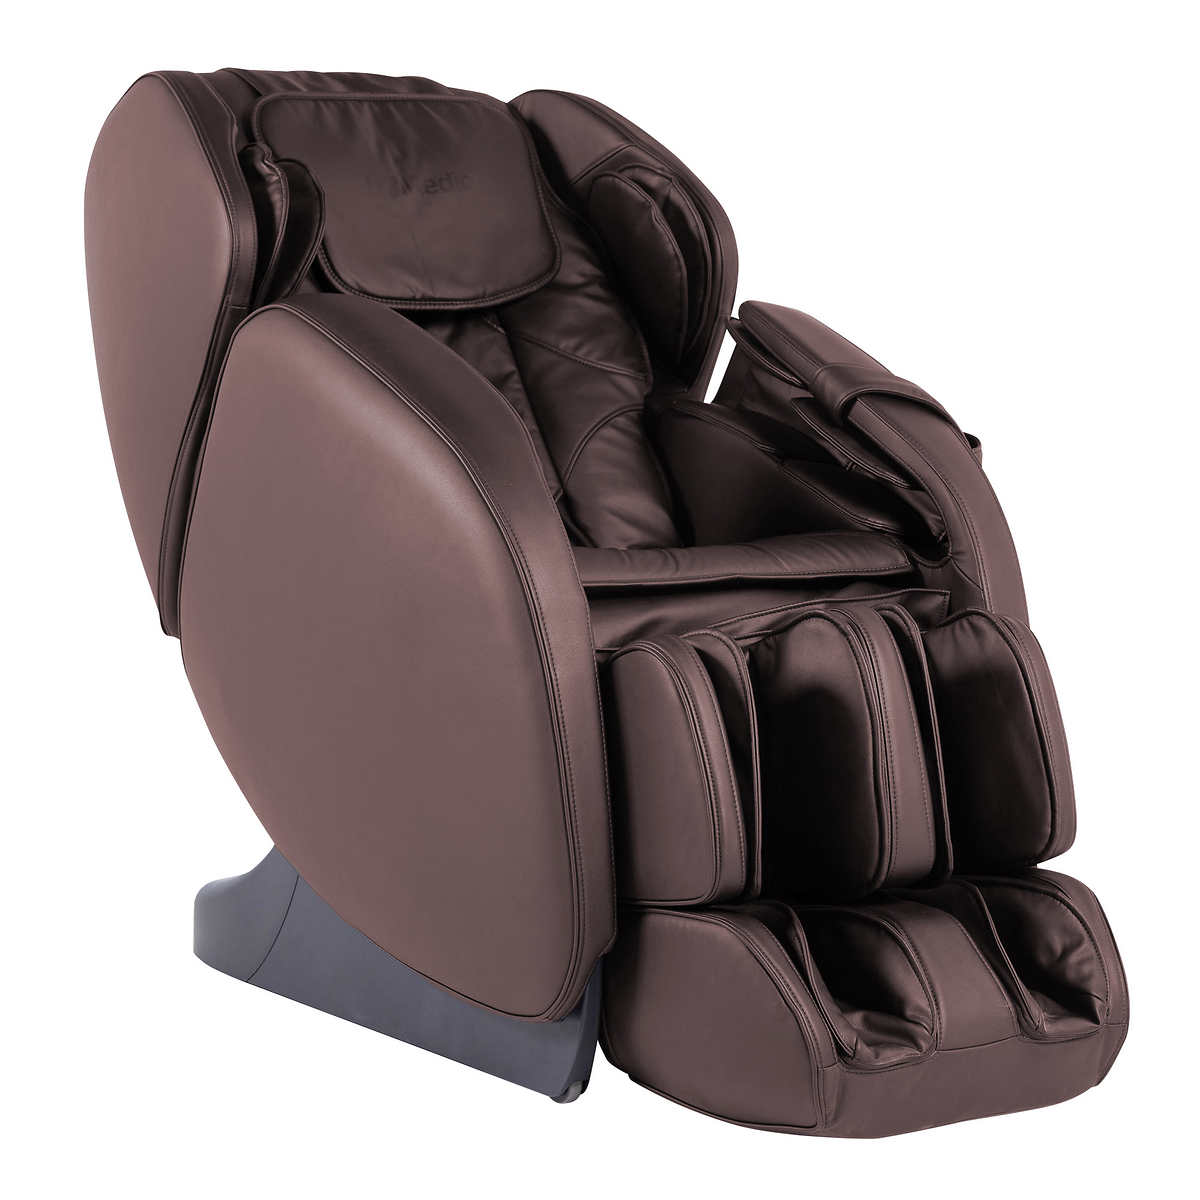 Trumedic Mc 1500 Instashiatsu Massage Chair Costco